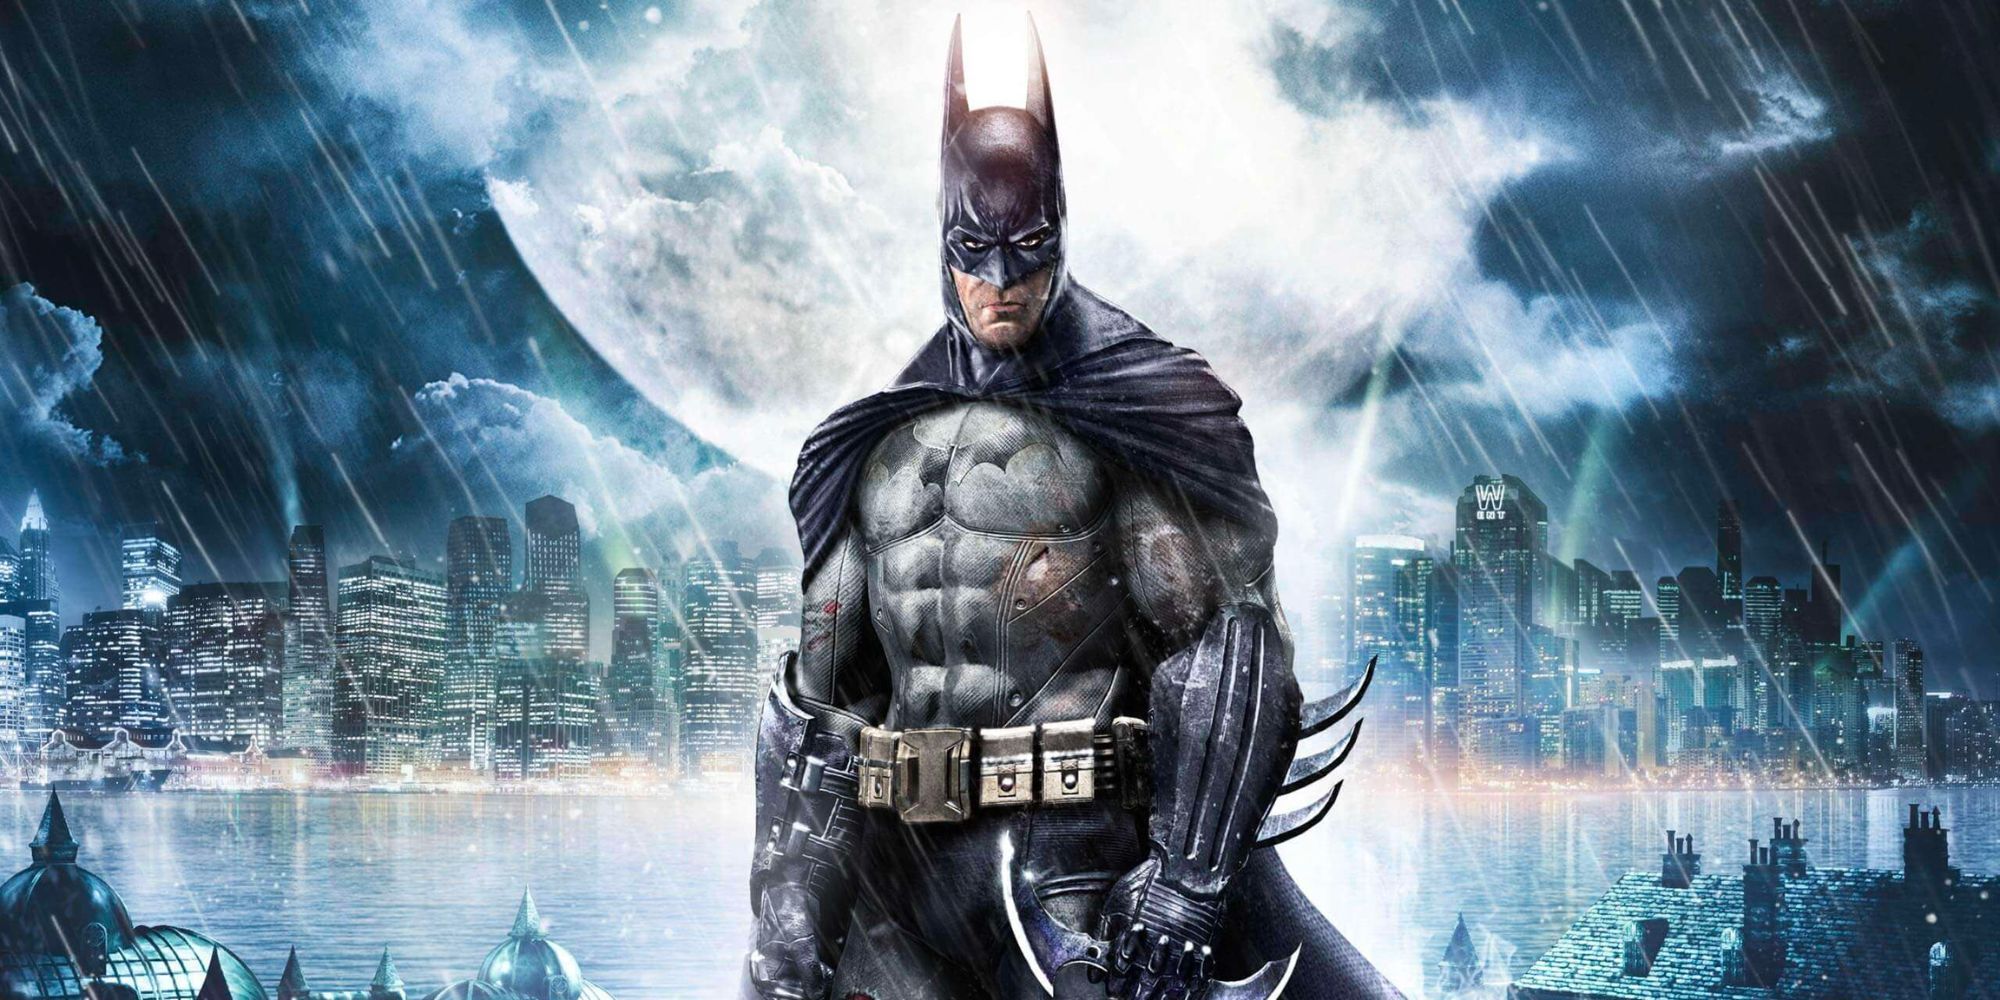 Batman in front of Gotham City